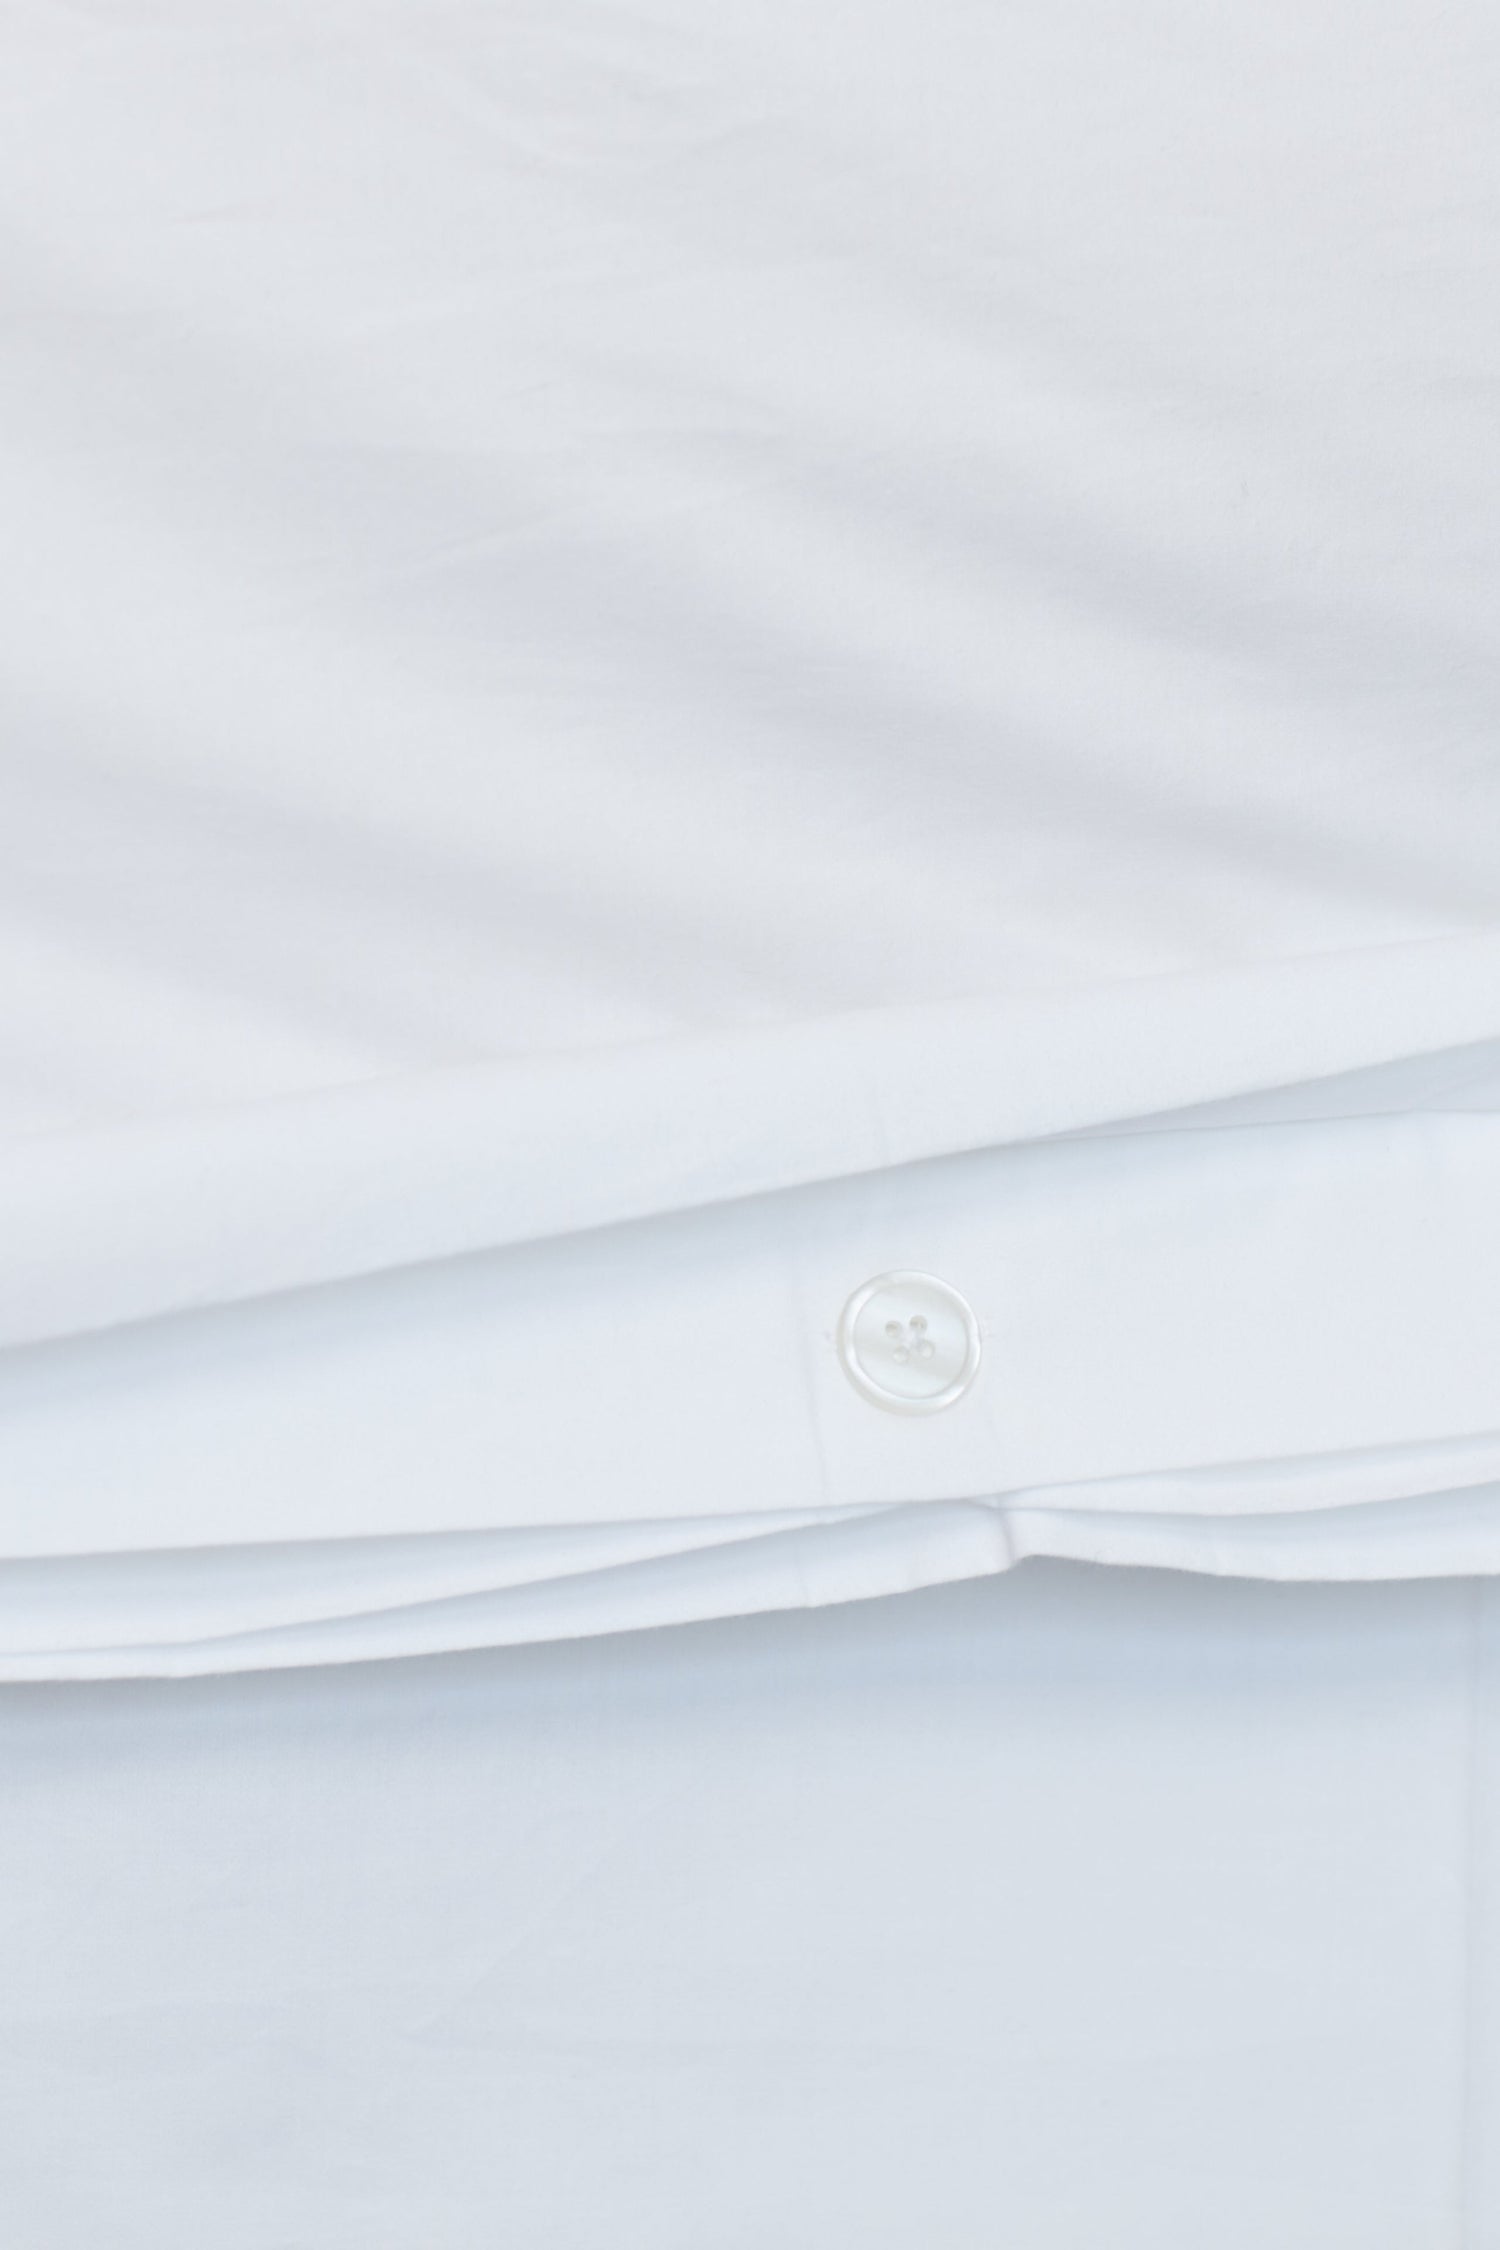 Mink Banded Duvet Cover + White Sheet Bundle | 100% Organic Certified Cotton